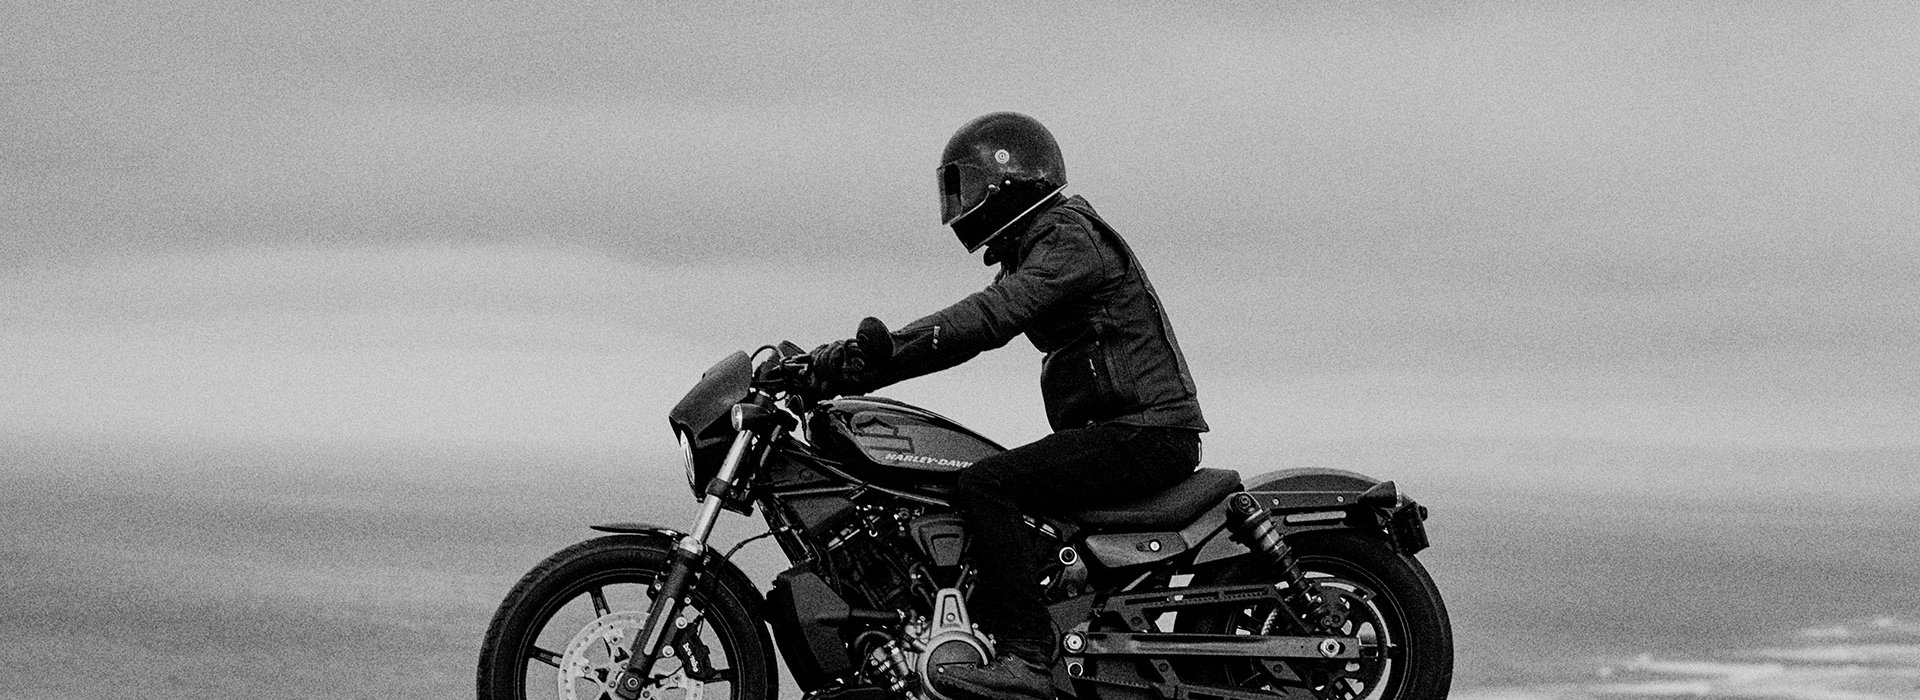 Moto - Harley Davidson